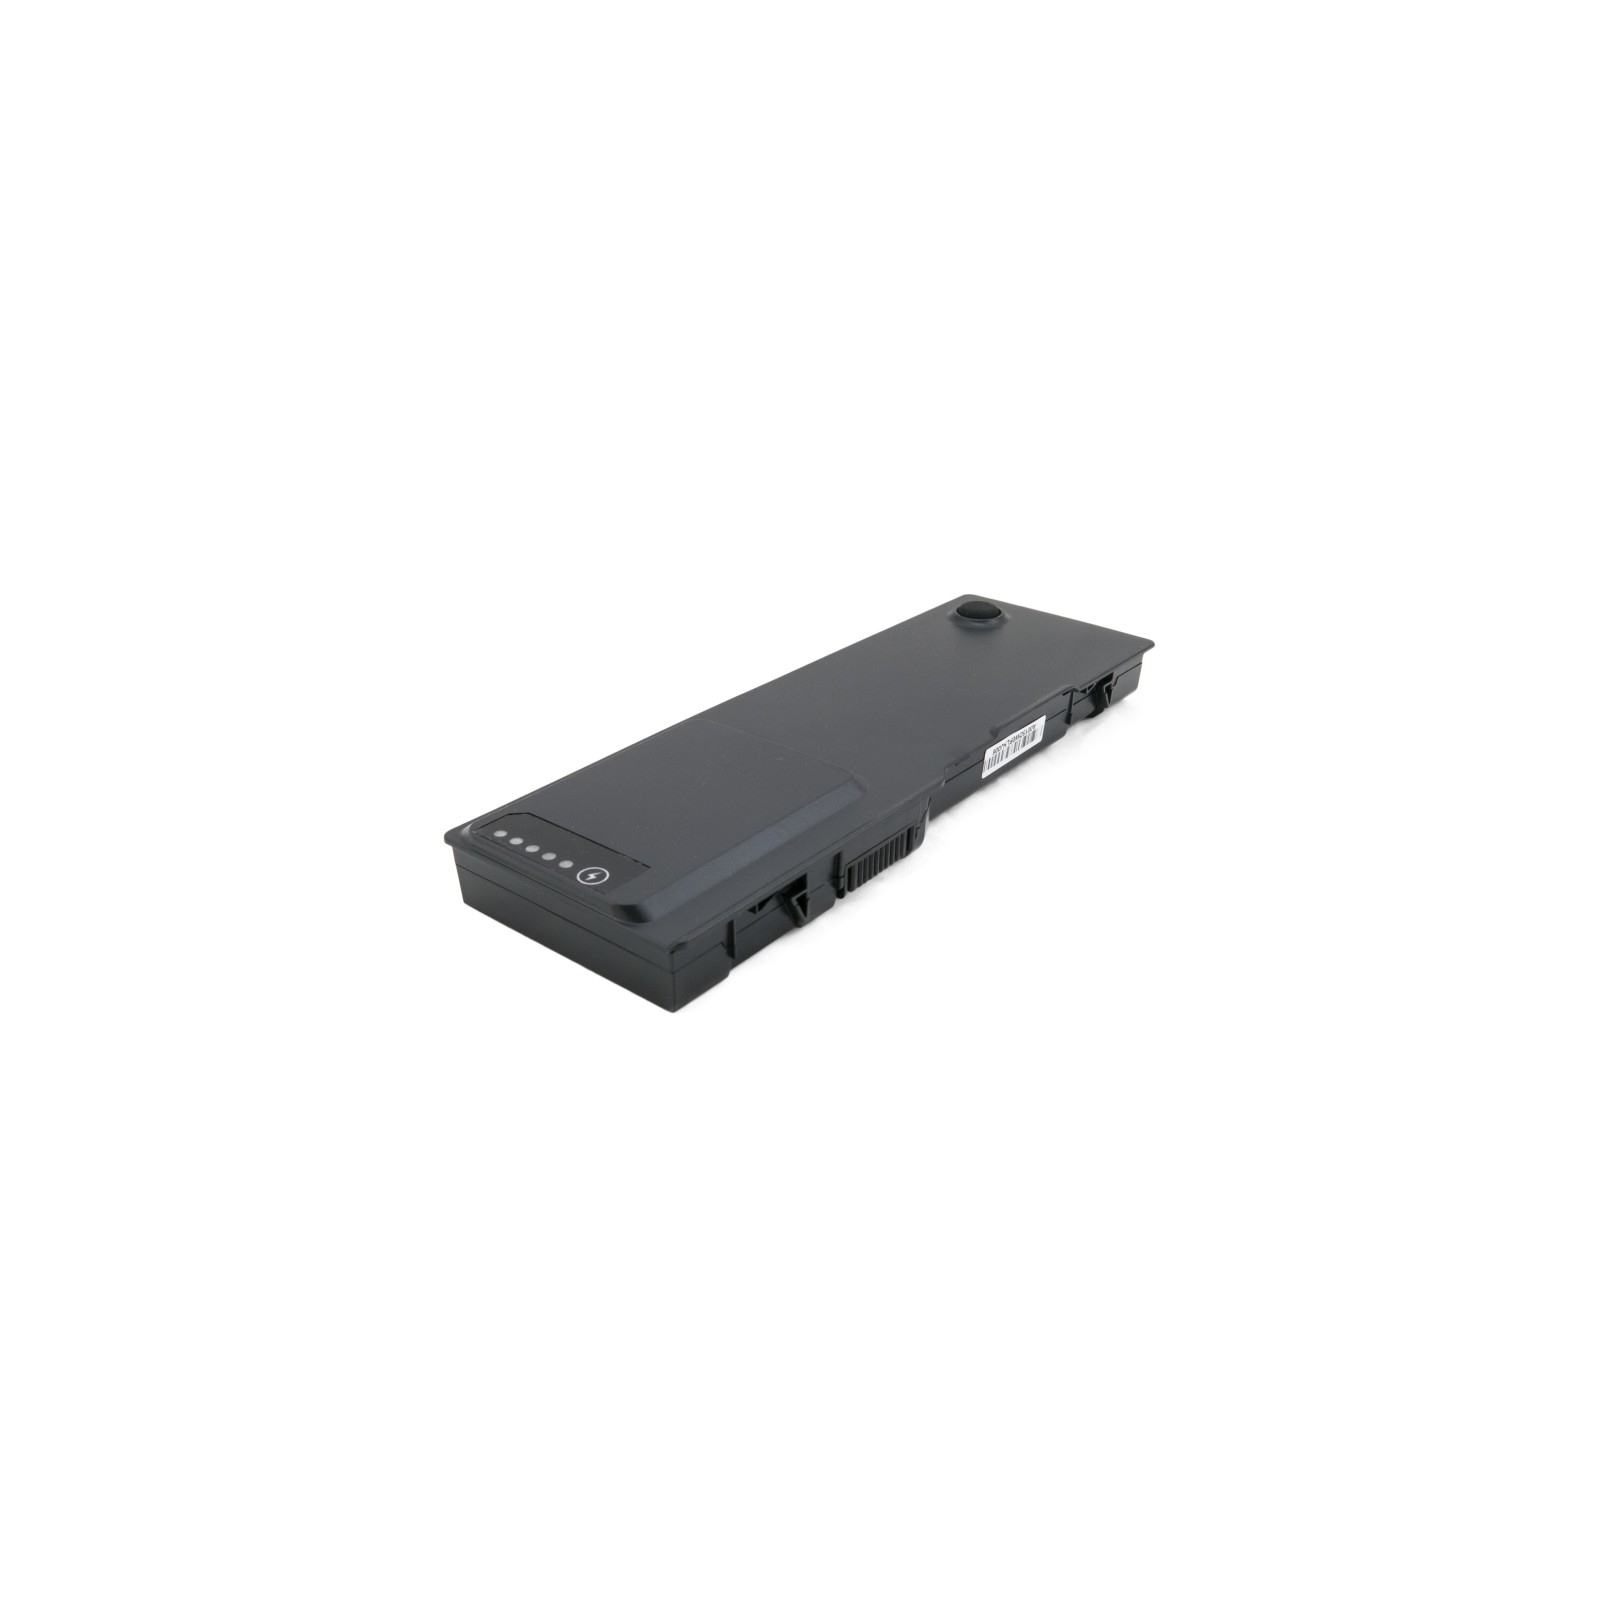 Аккумулятор для ноутбука Dell Inspiron 6400, 5200 mAh Extradigital (BND3931) изображение 3